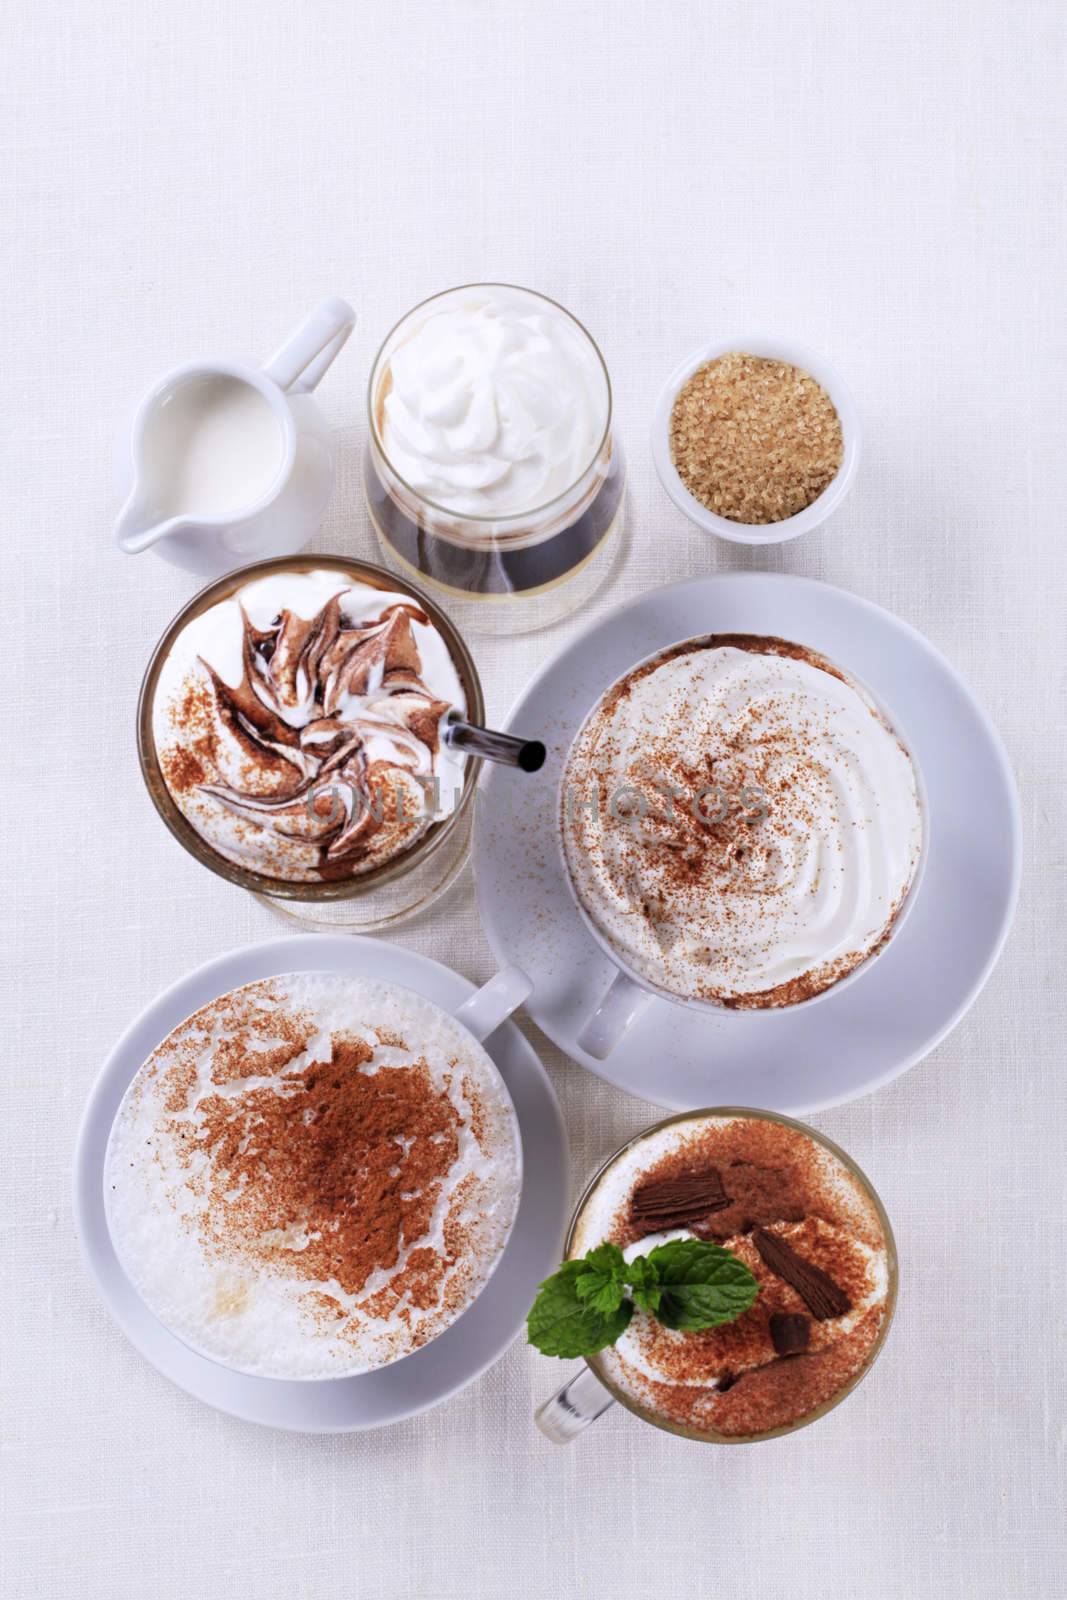 Variety of coffee and chocolate drinks - overhead